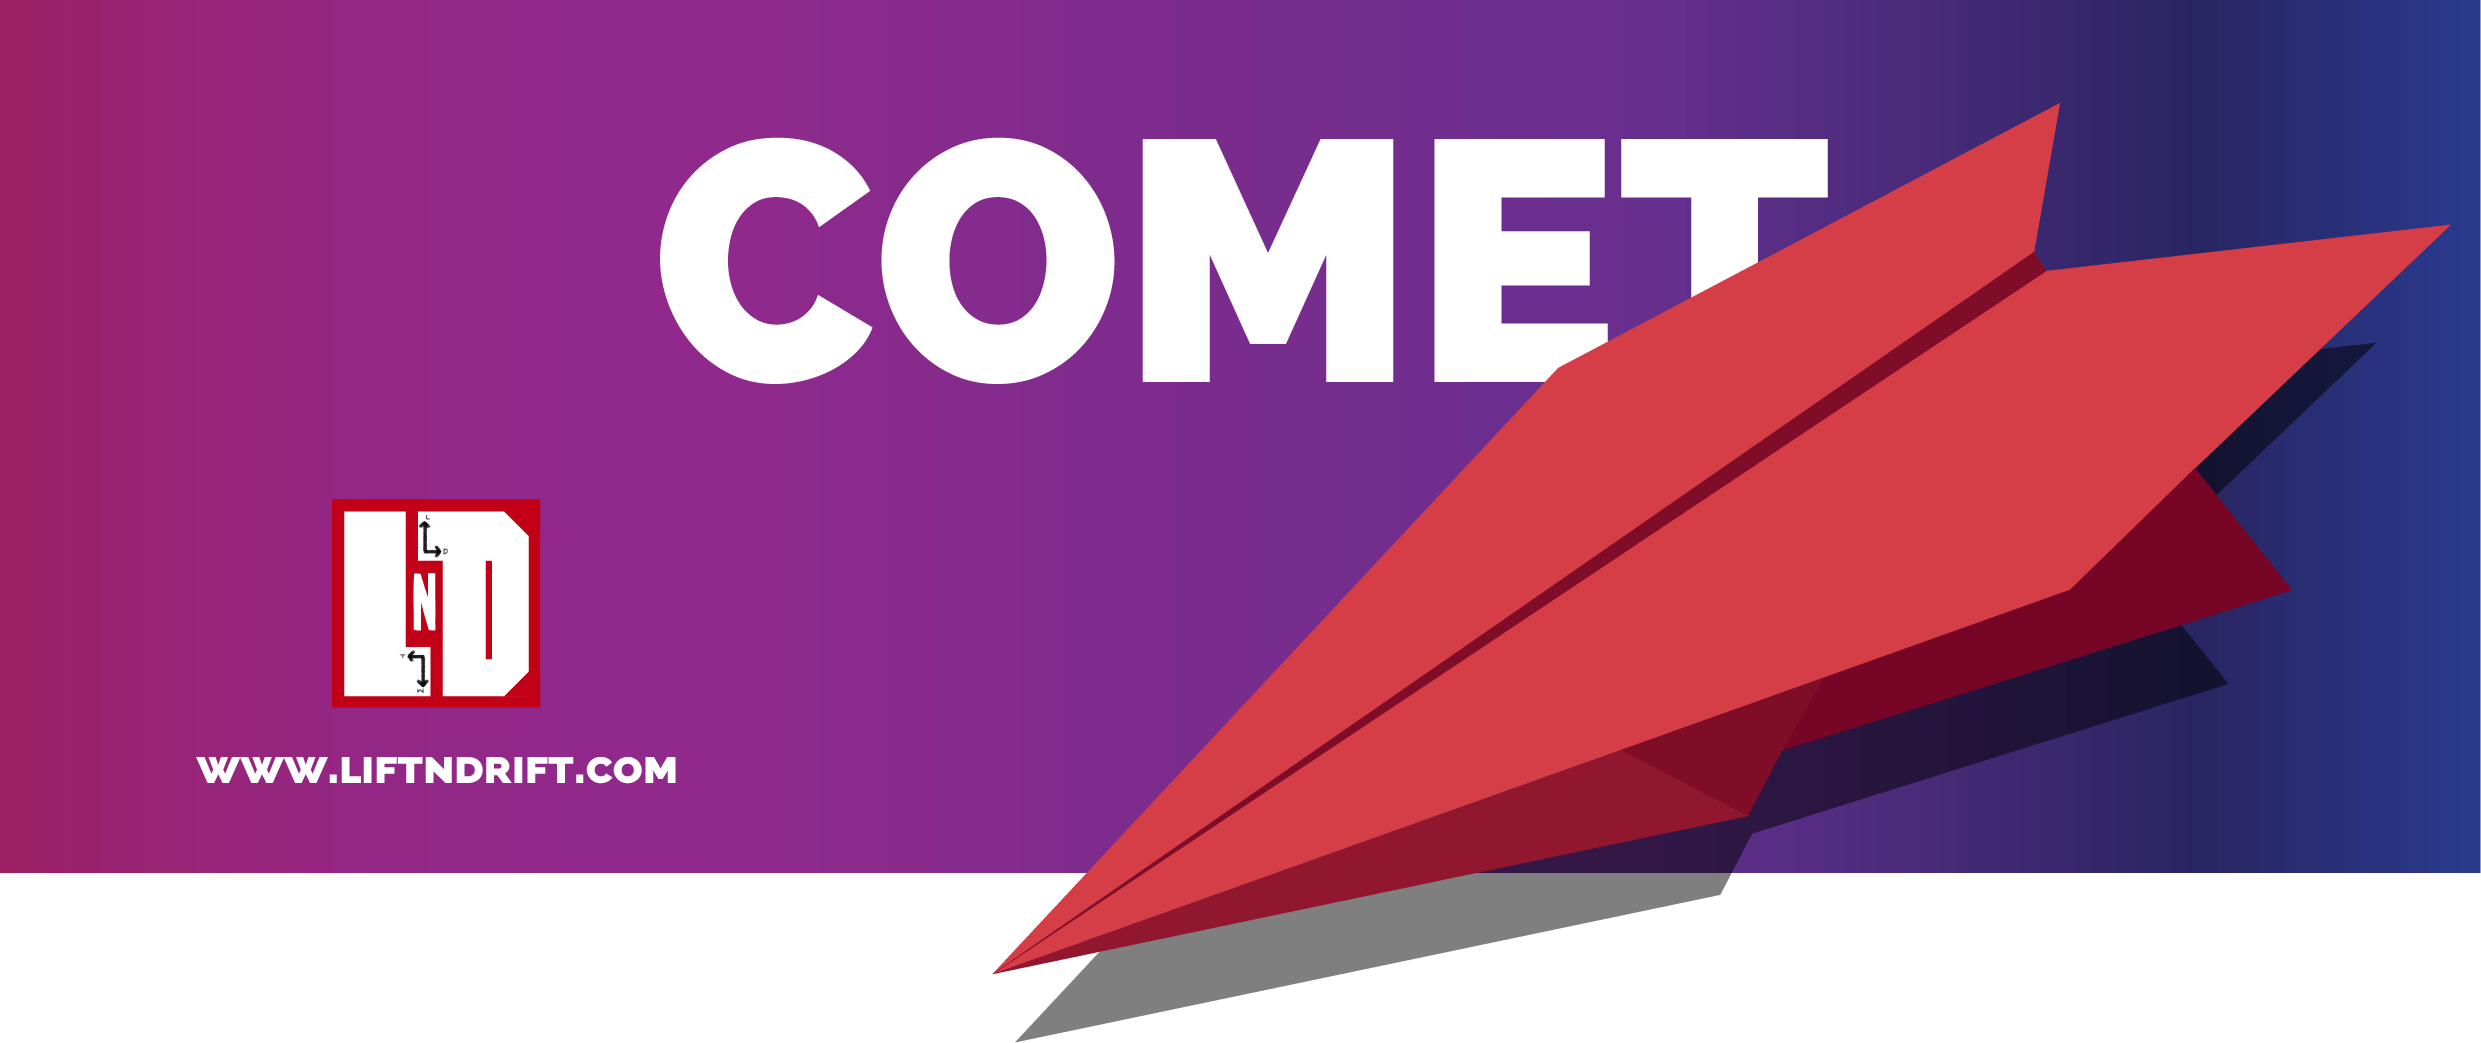 Comet paper airplane